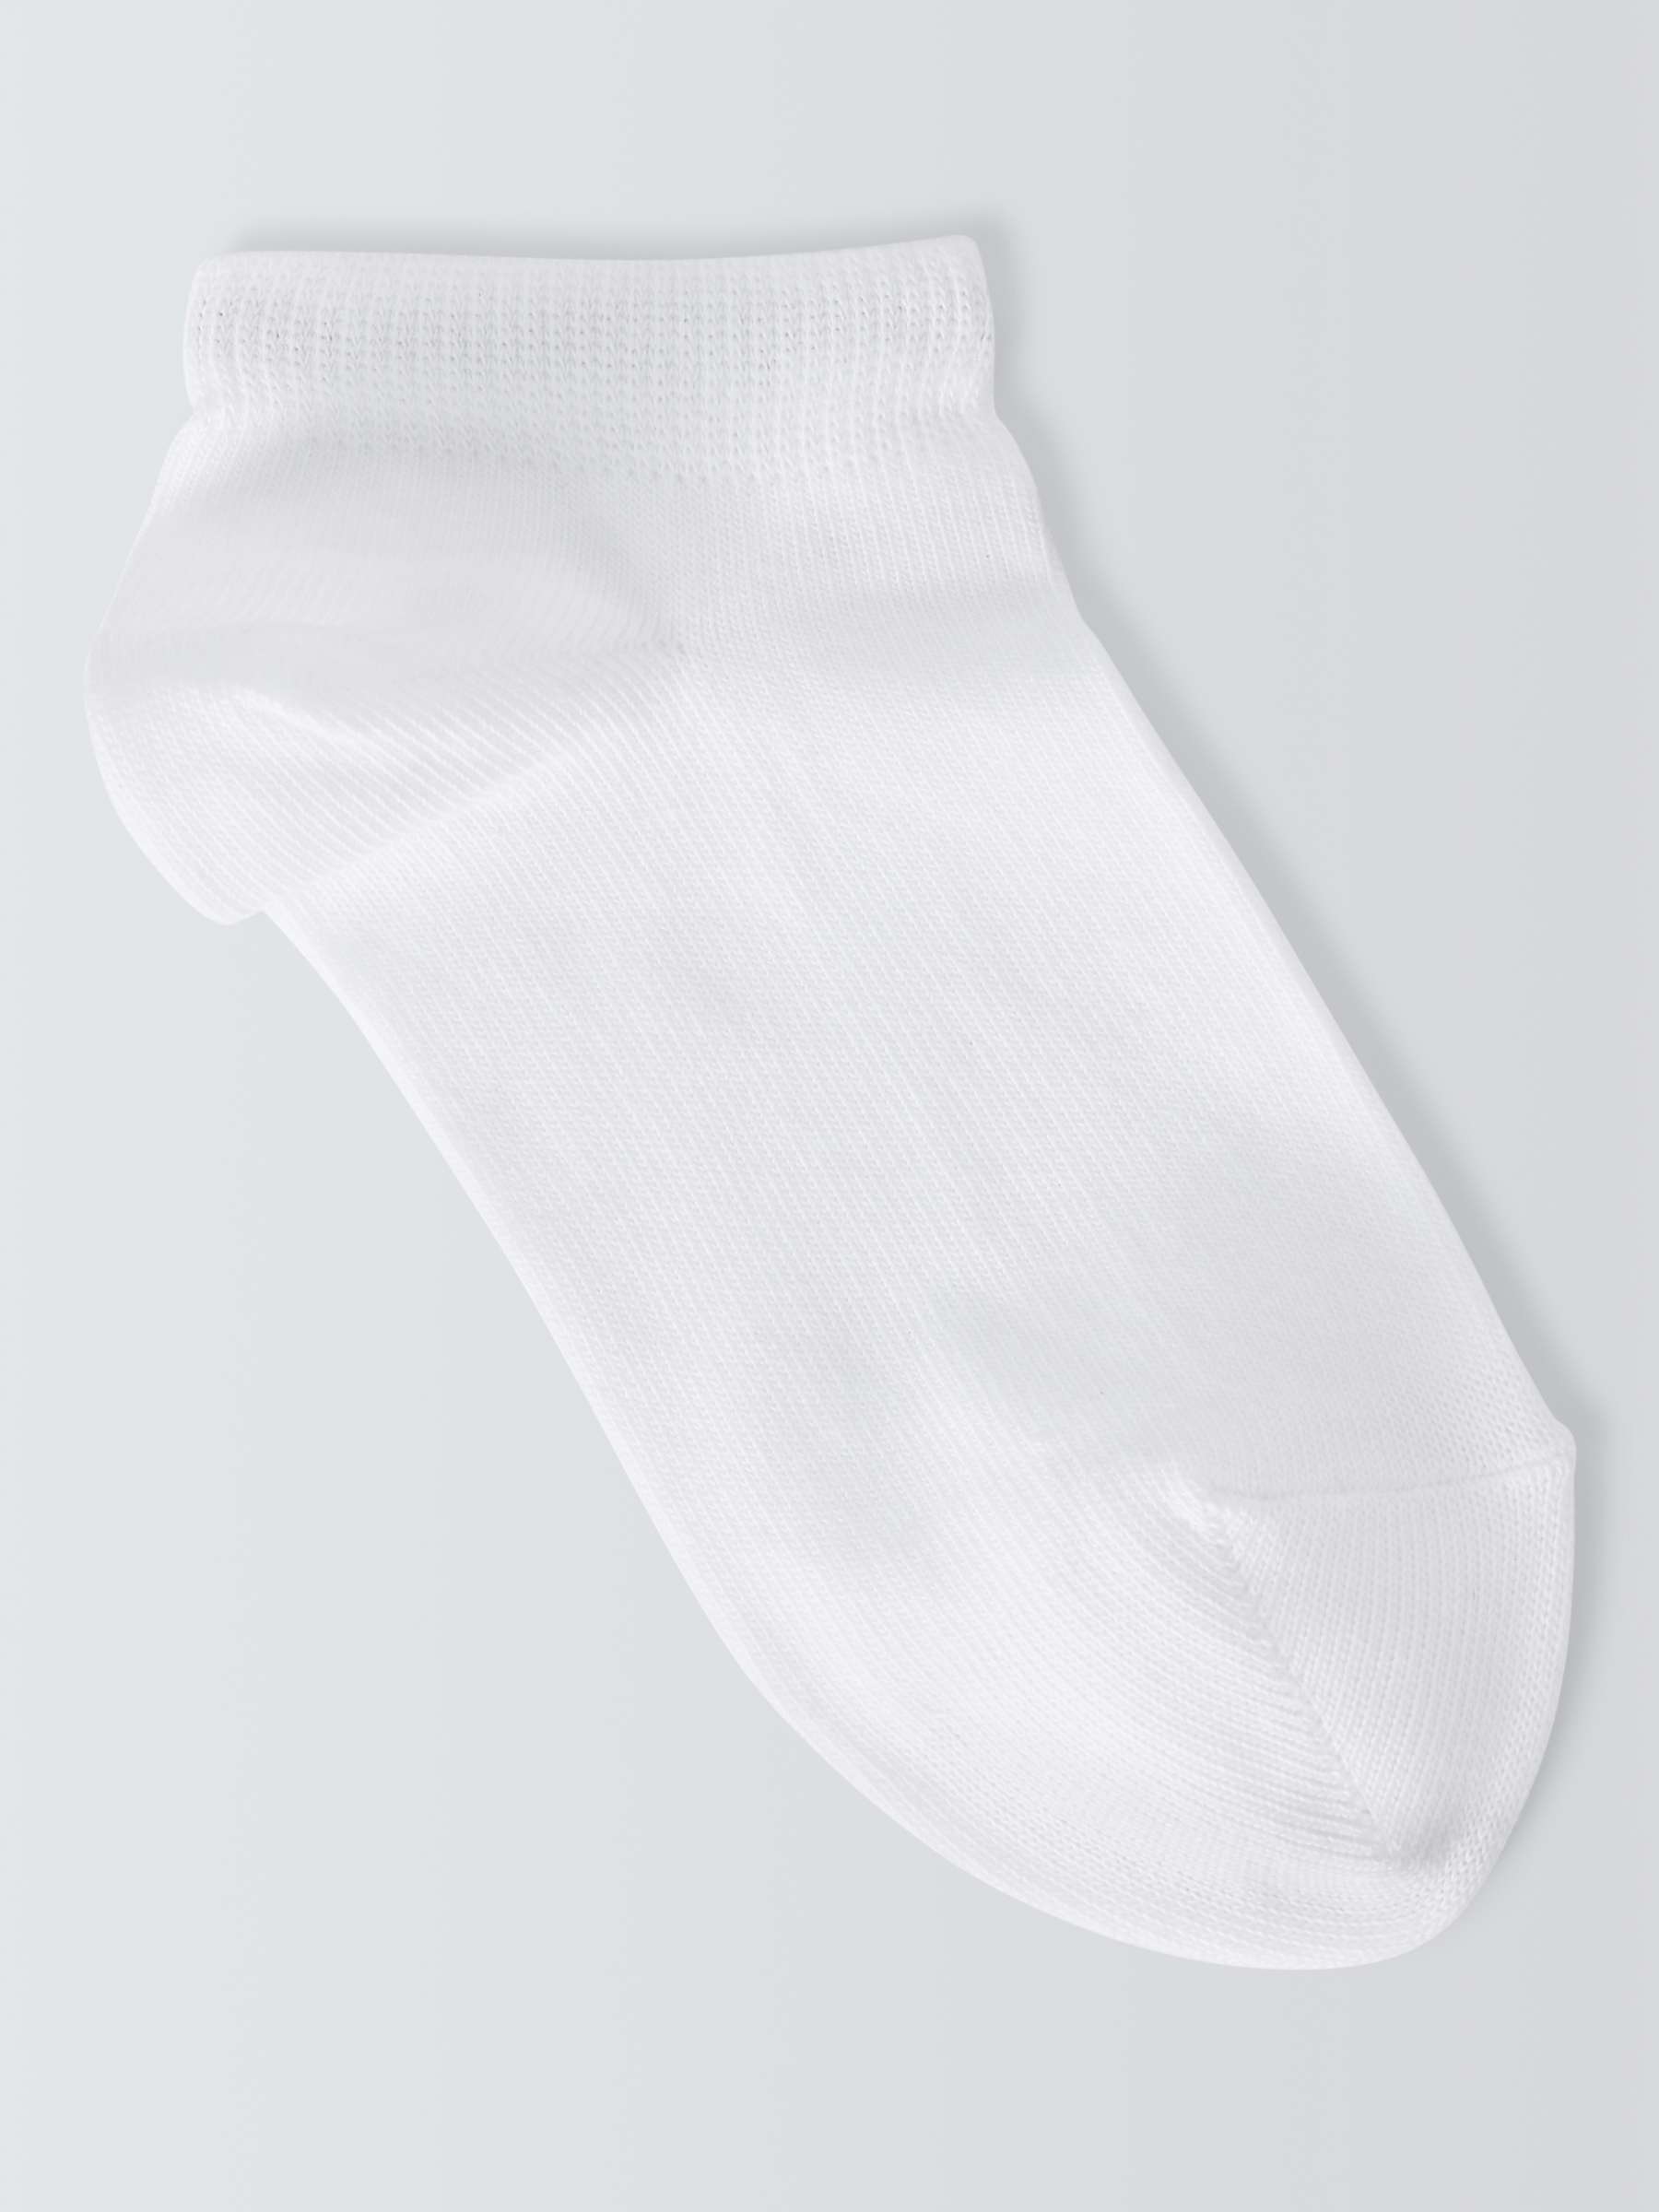 Buy John Lewis ANYDAY Kids' Trainer Liner Socks, Pack of 7, White Online at johnlewis.com